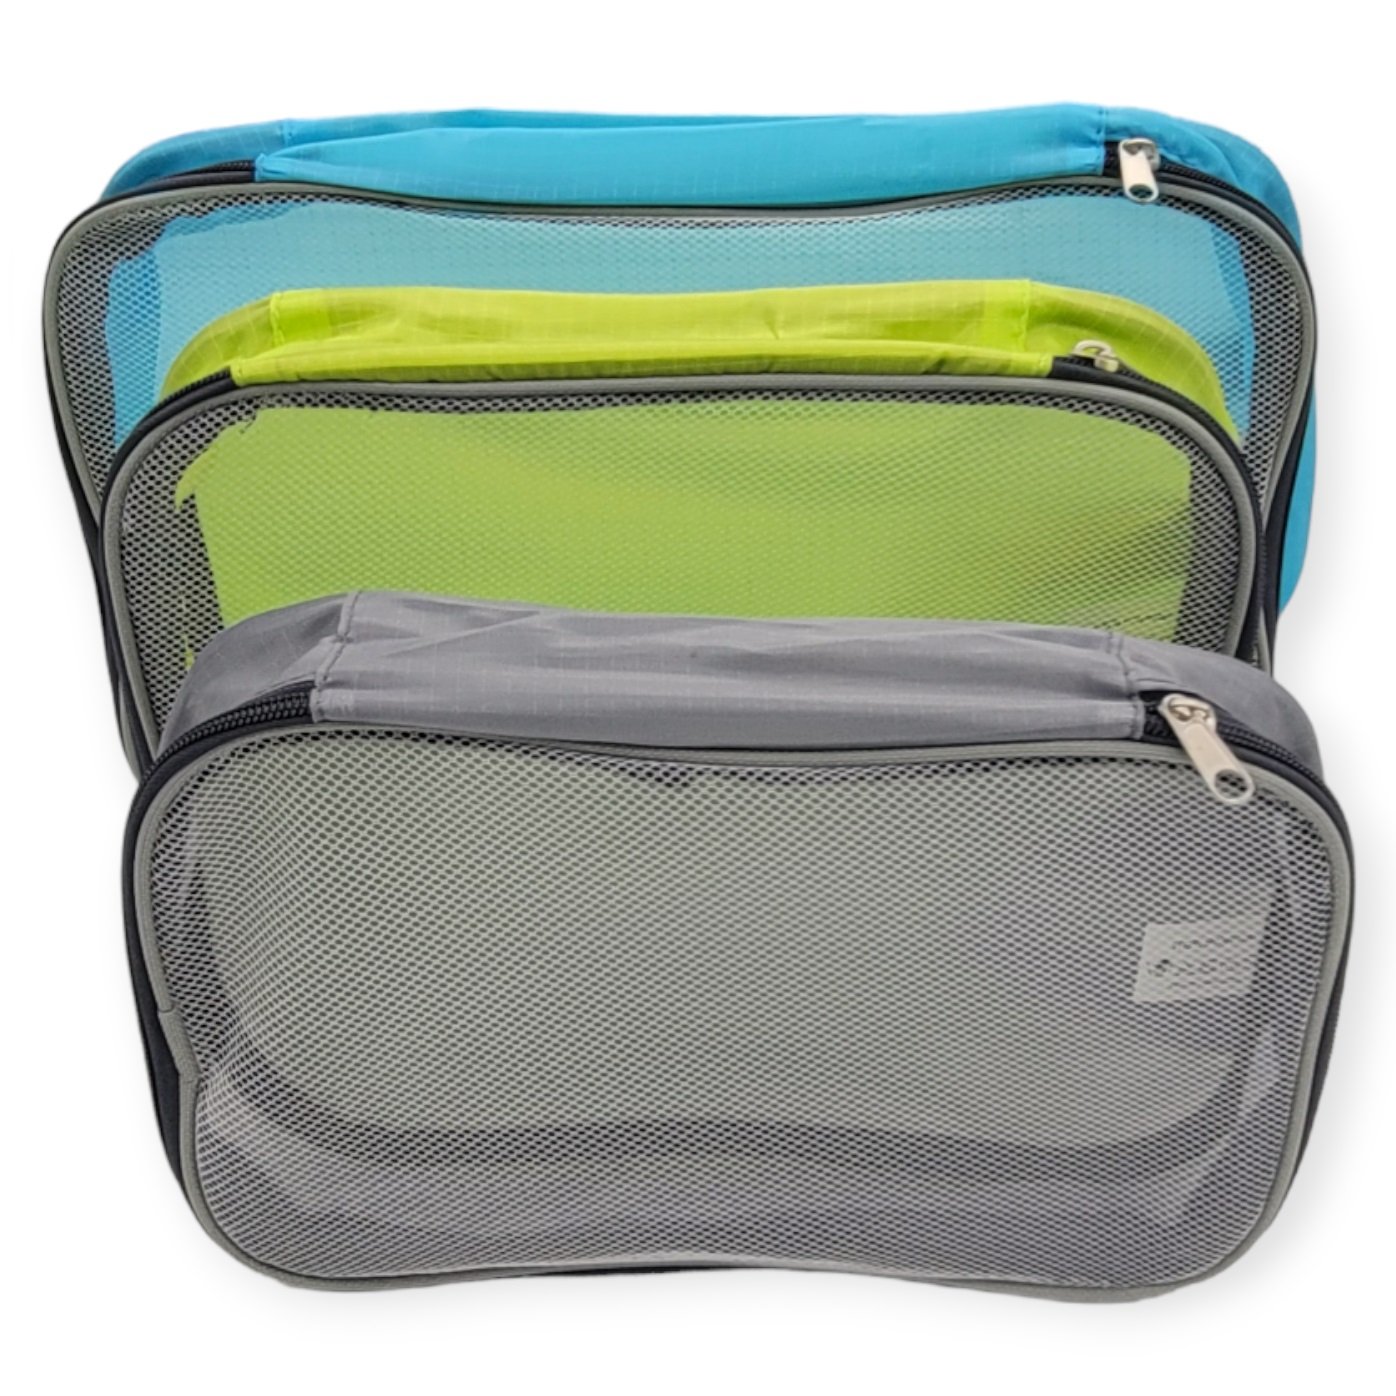 Handy Housewares 3pc Packing Travel Organizer Cubes Set - Small, Medium &#x26; Large Sizes